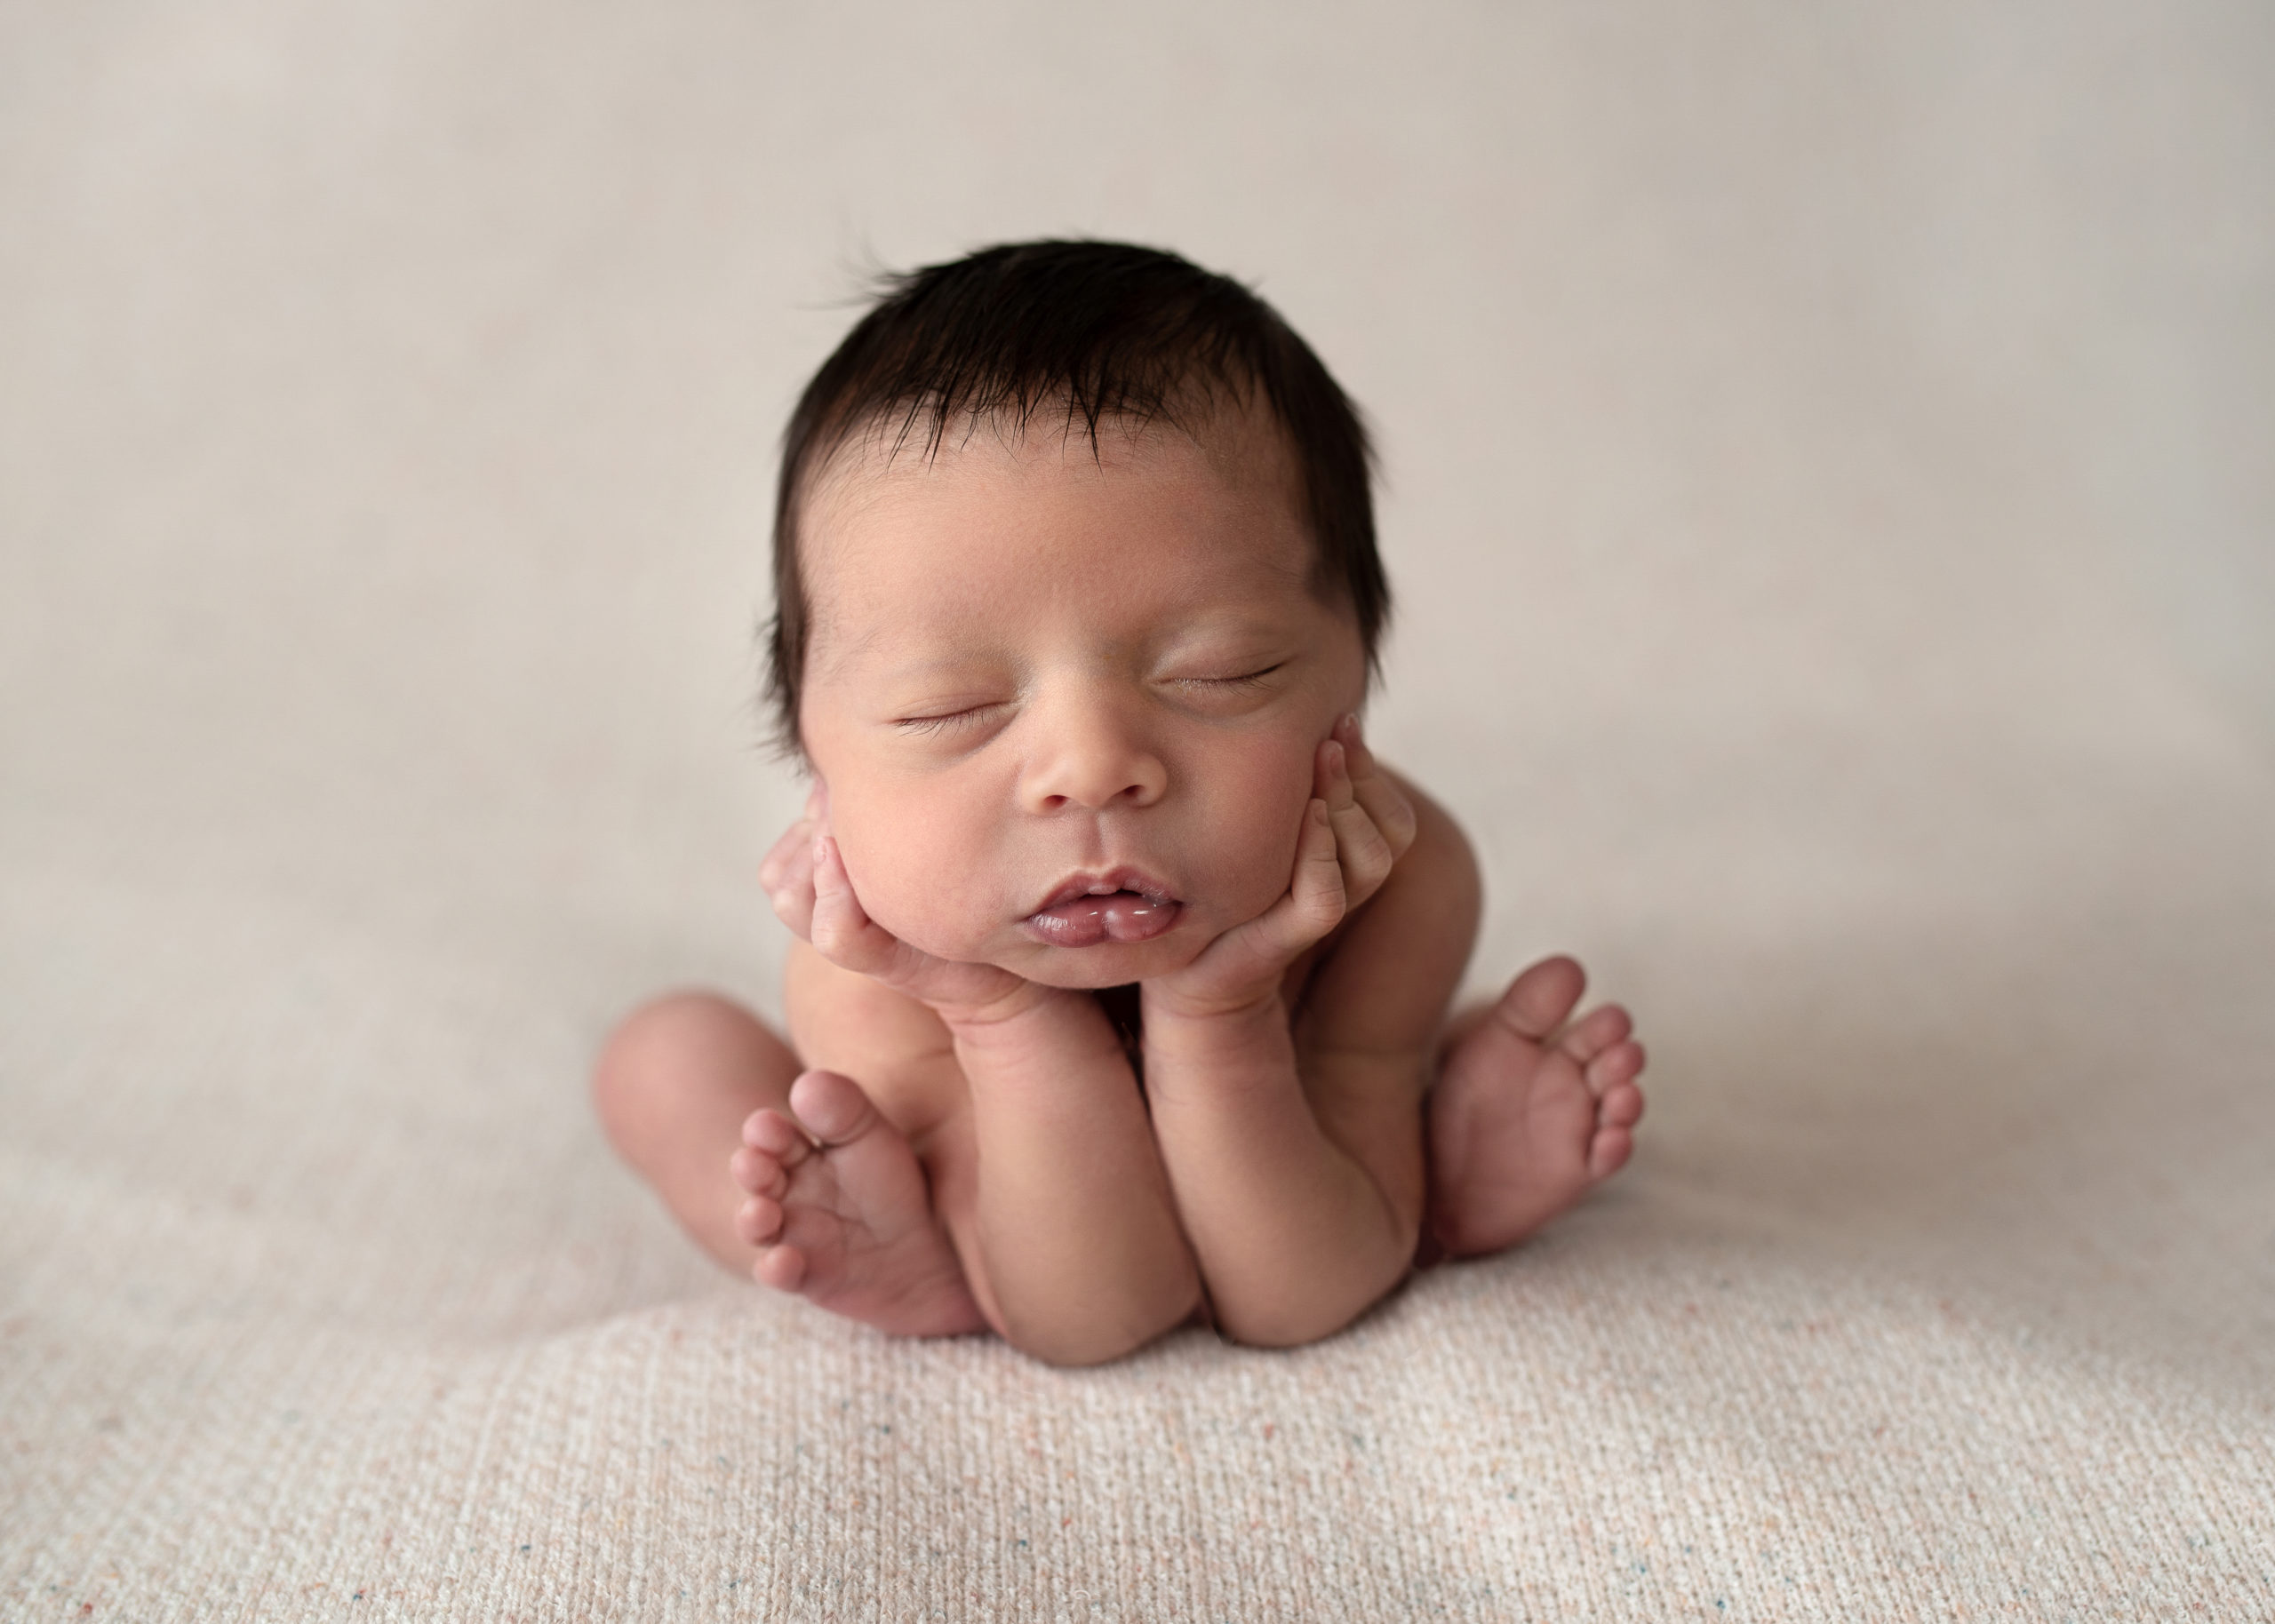 newborn baby with dark hair resting their head on their hands Houston Baby Stores